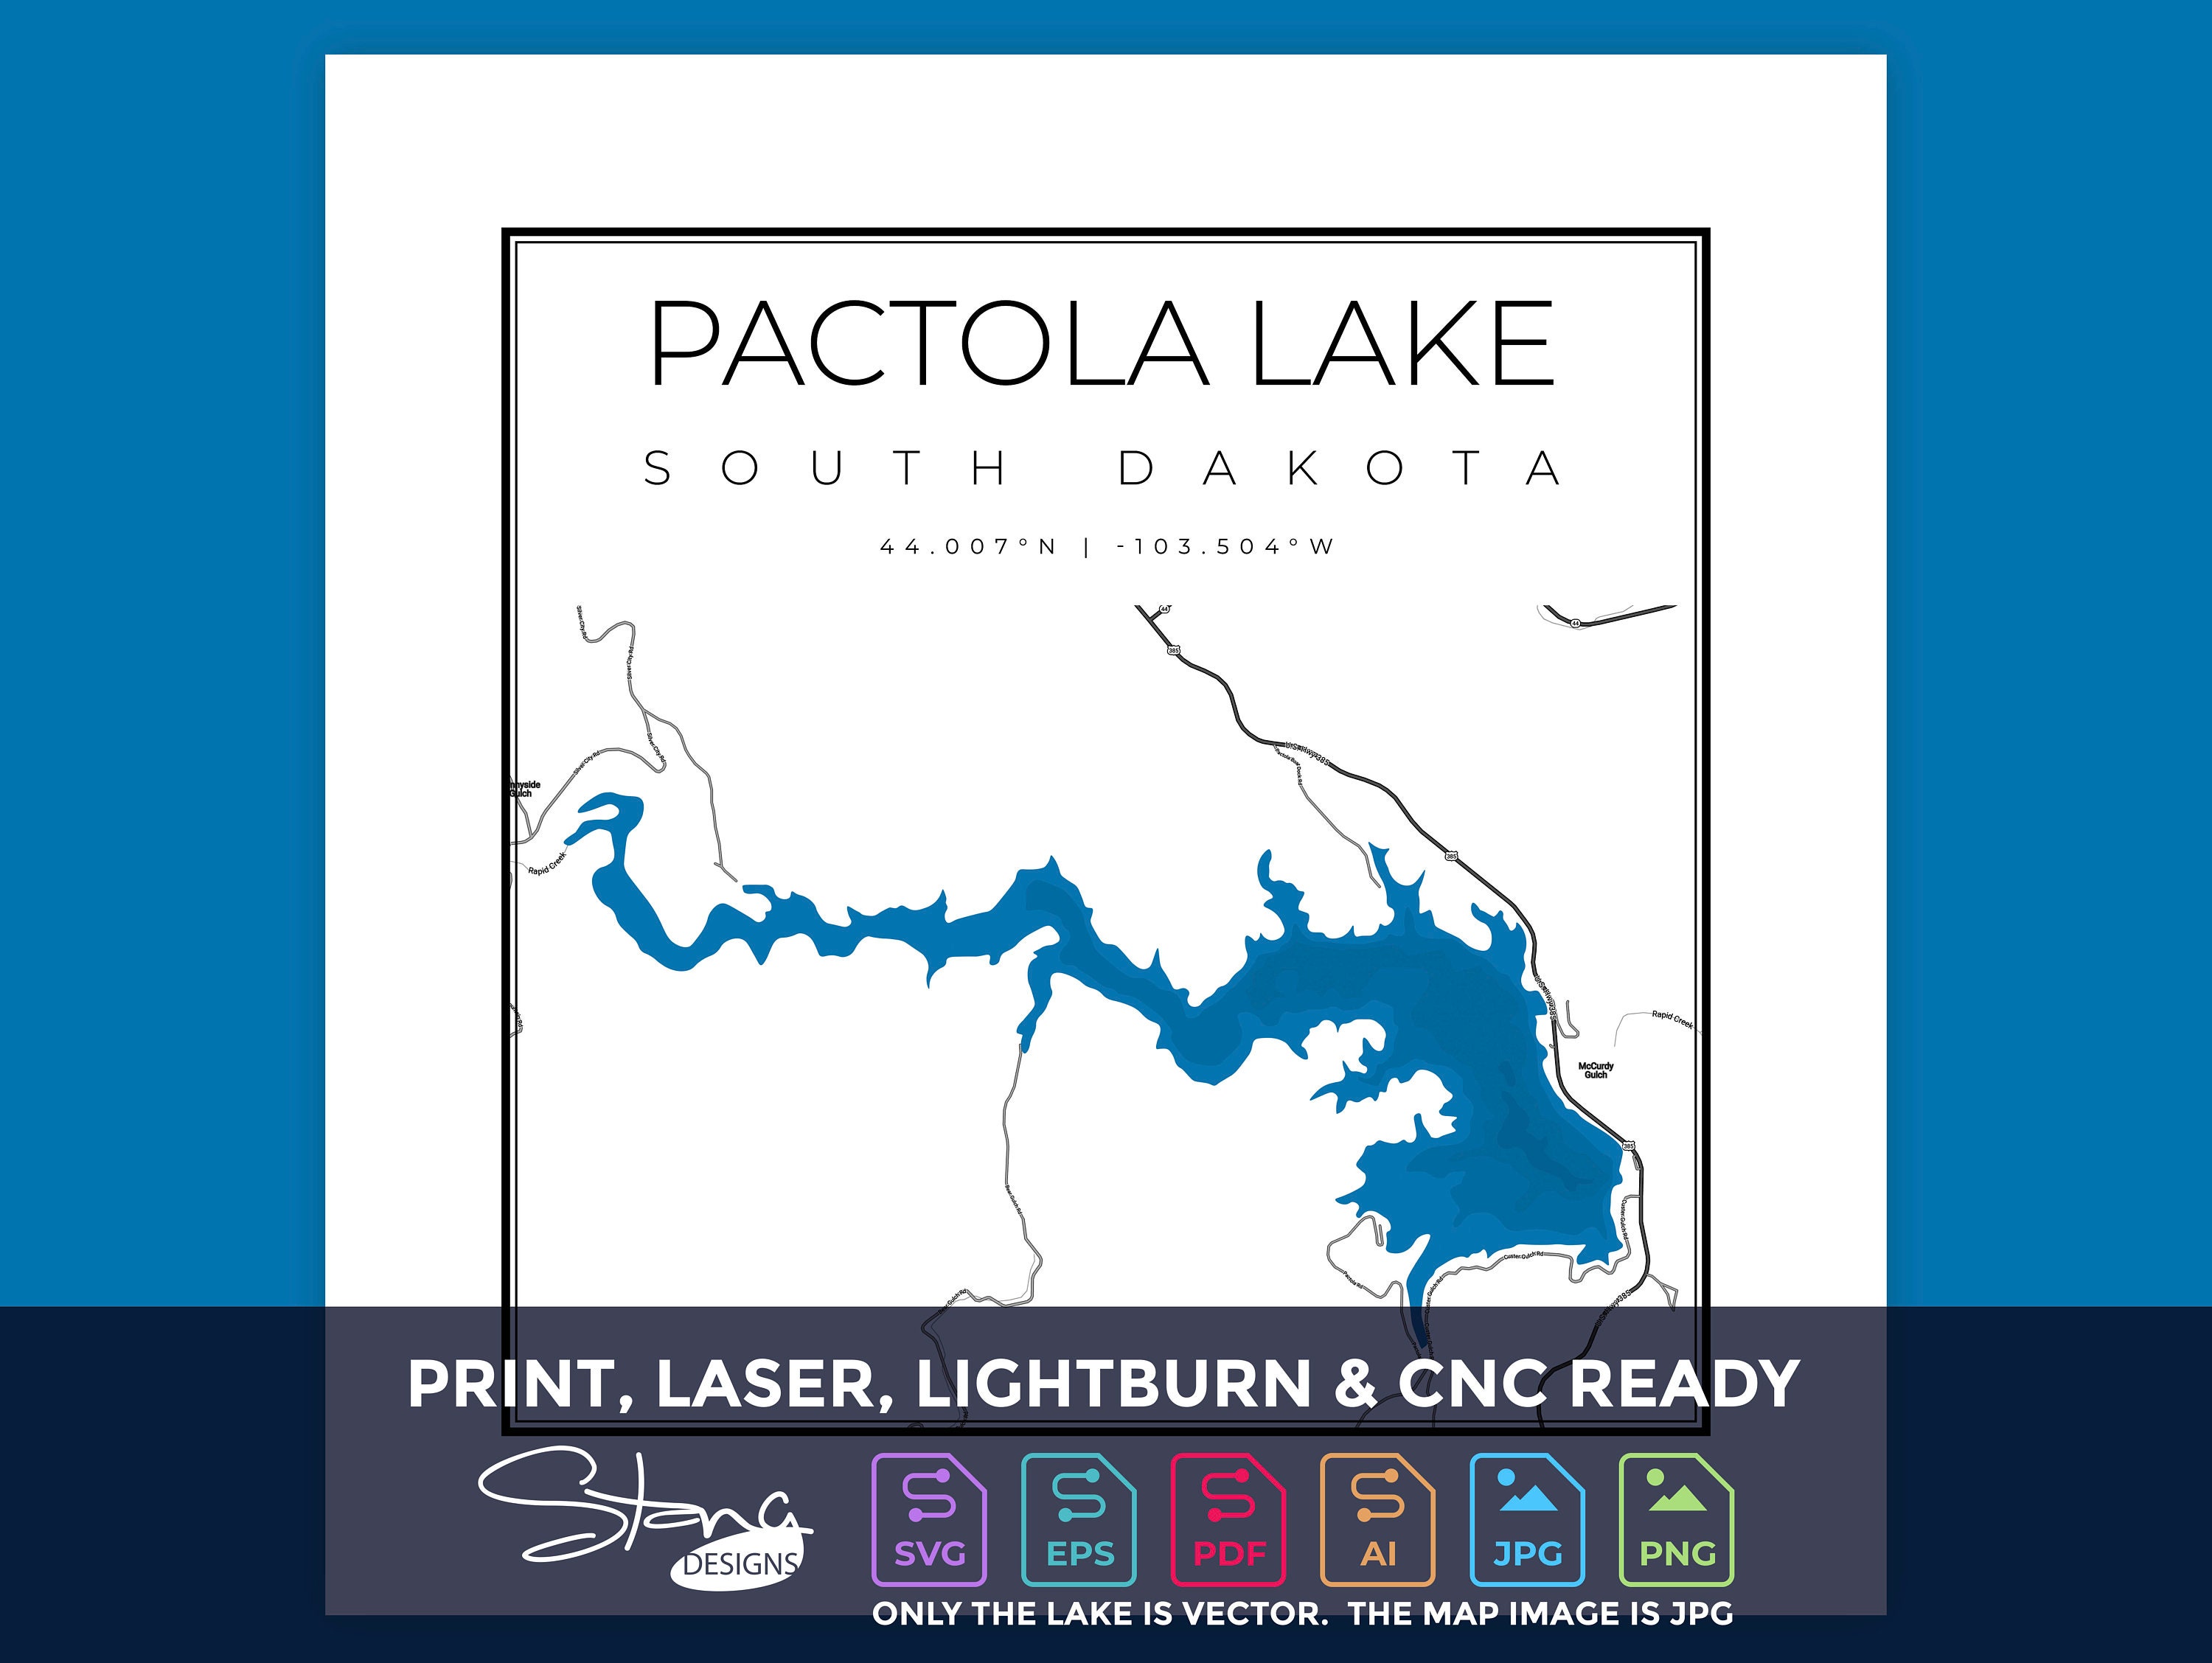 Pactola Lake